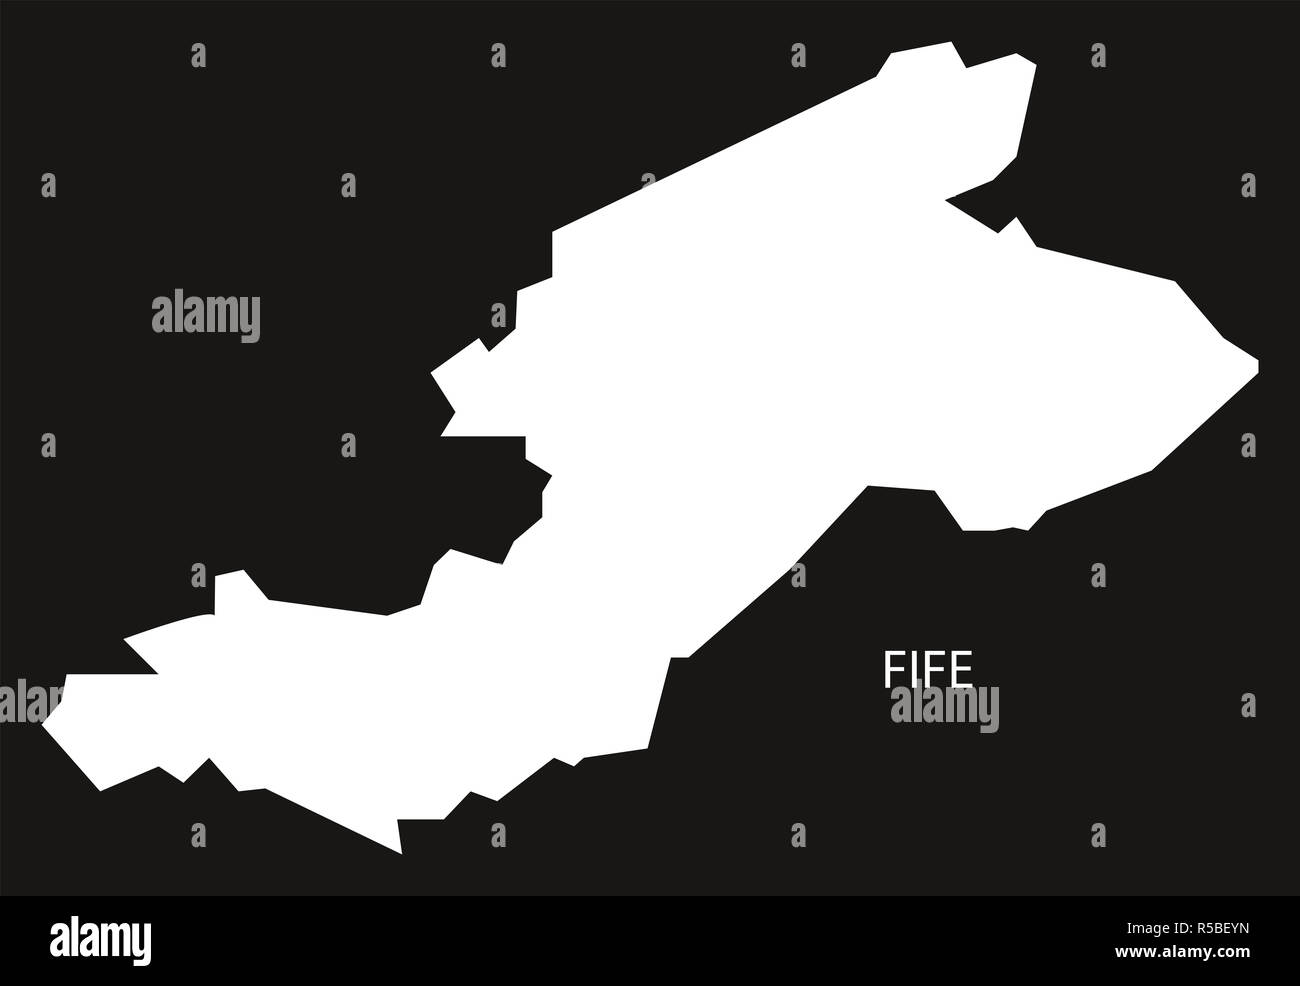 Fife Scotland map black inverted silhouette illustration Stock Photo